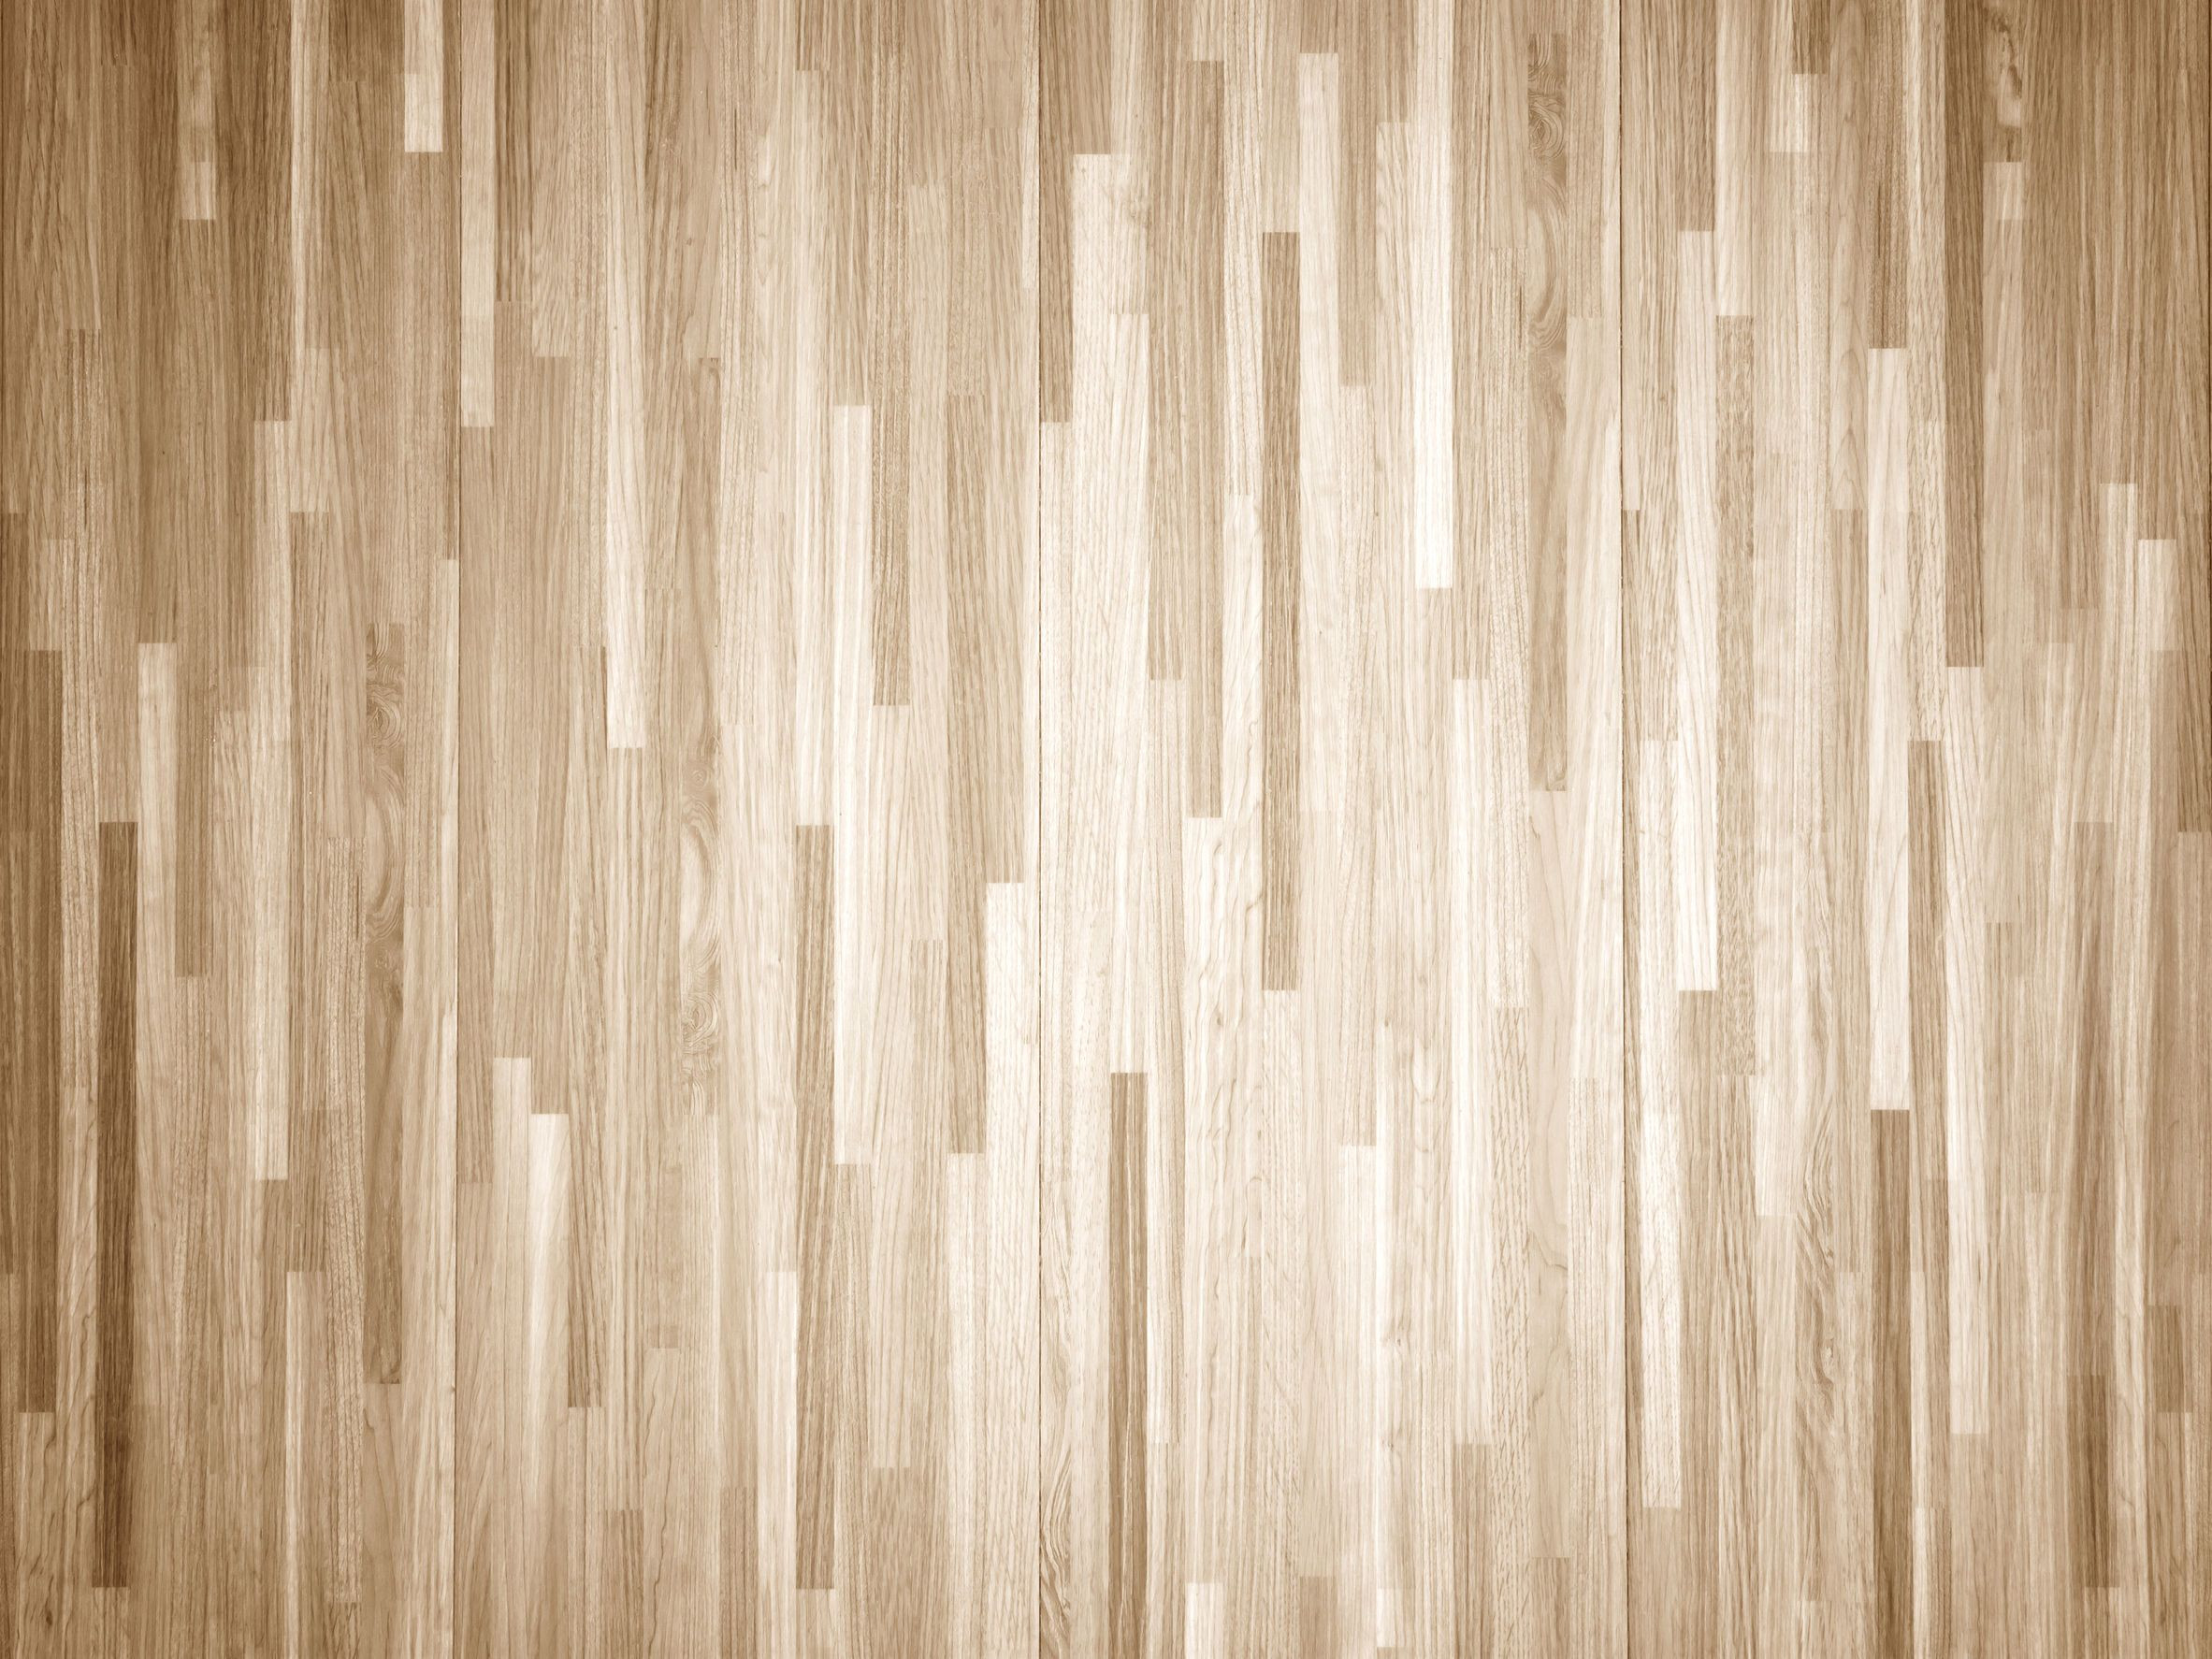 17 Stunning Best Hardwood Floor Installers Near Me 2024 free download best hardwood floor installers near me of how to chemically strip wood floors woodfloordoctor com inside you